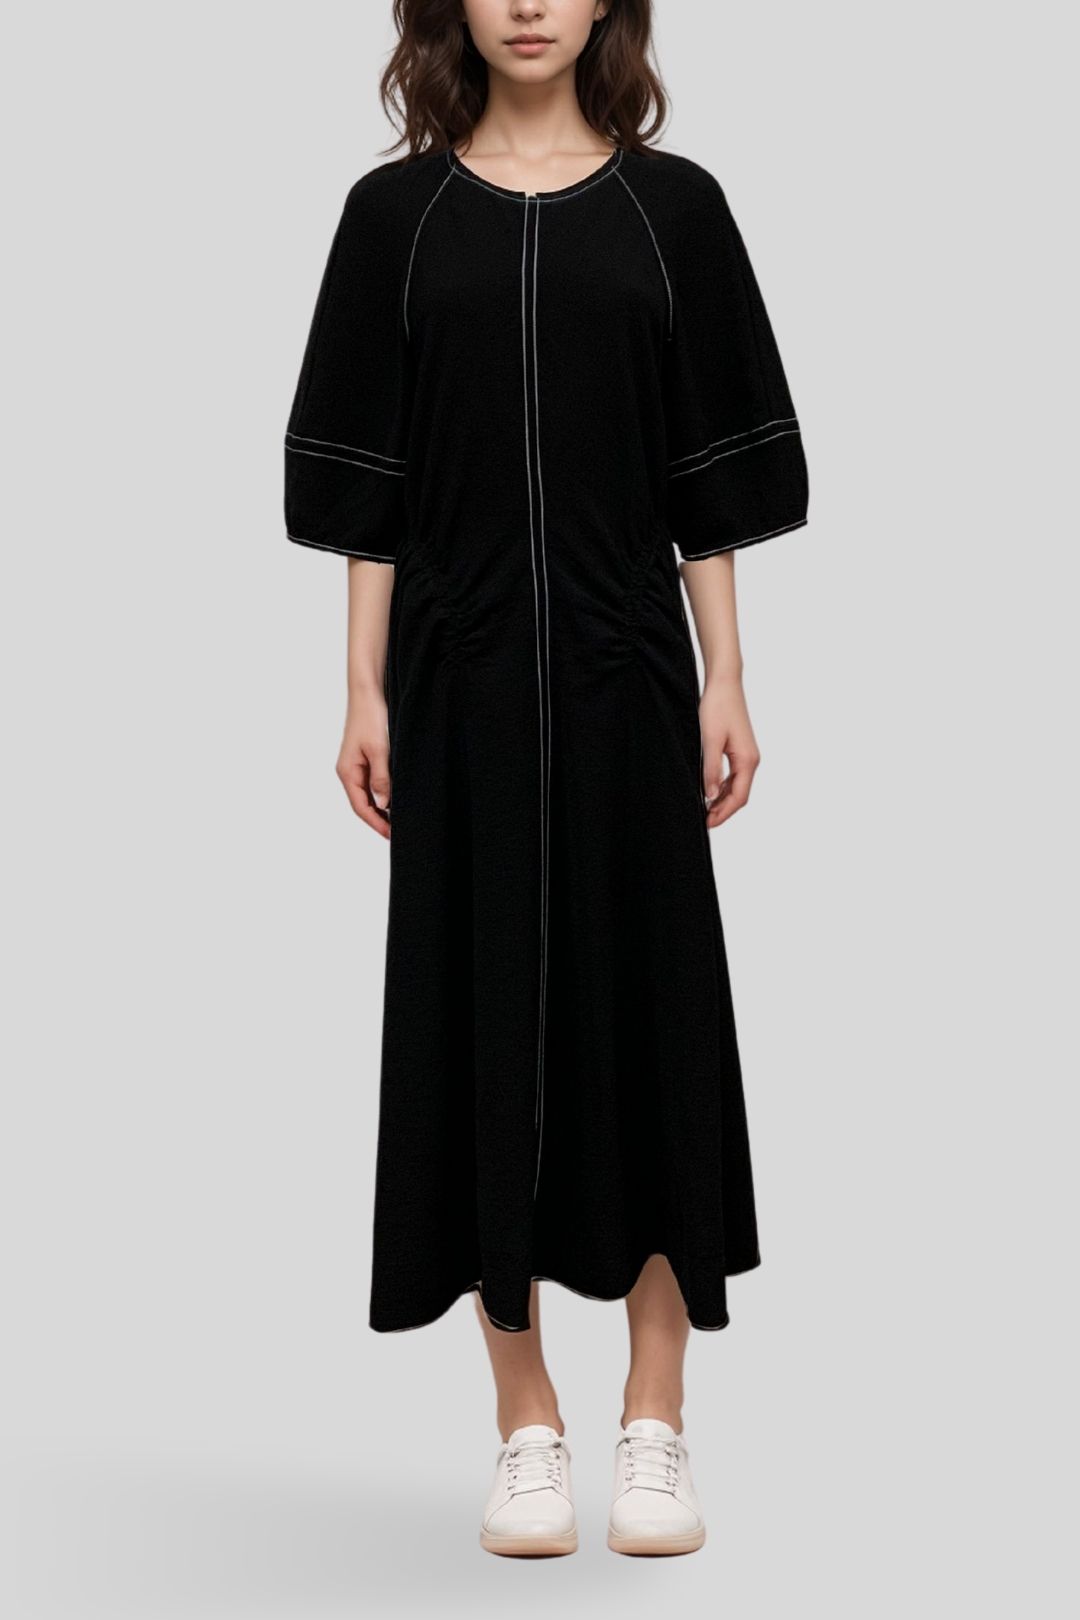 Veronika Maine Washed Crepe Gathered Midi Dress in Black